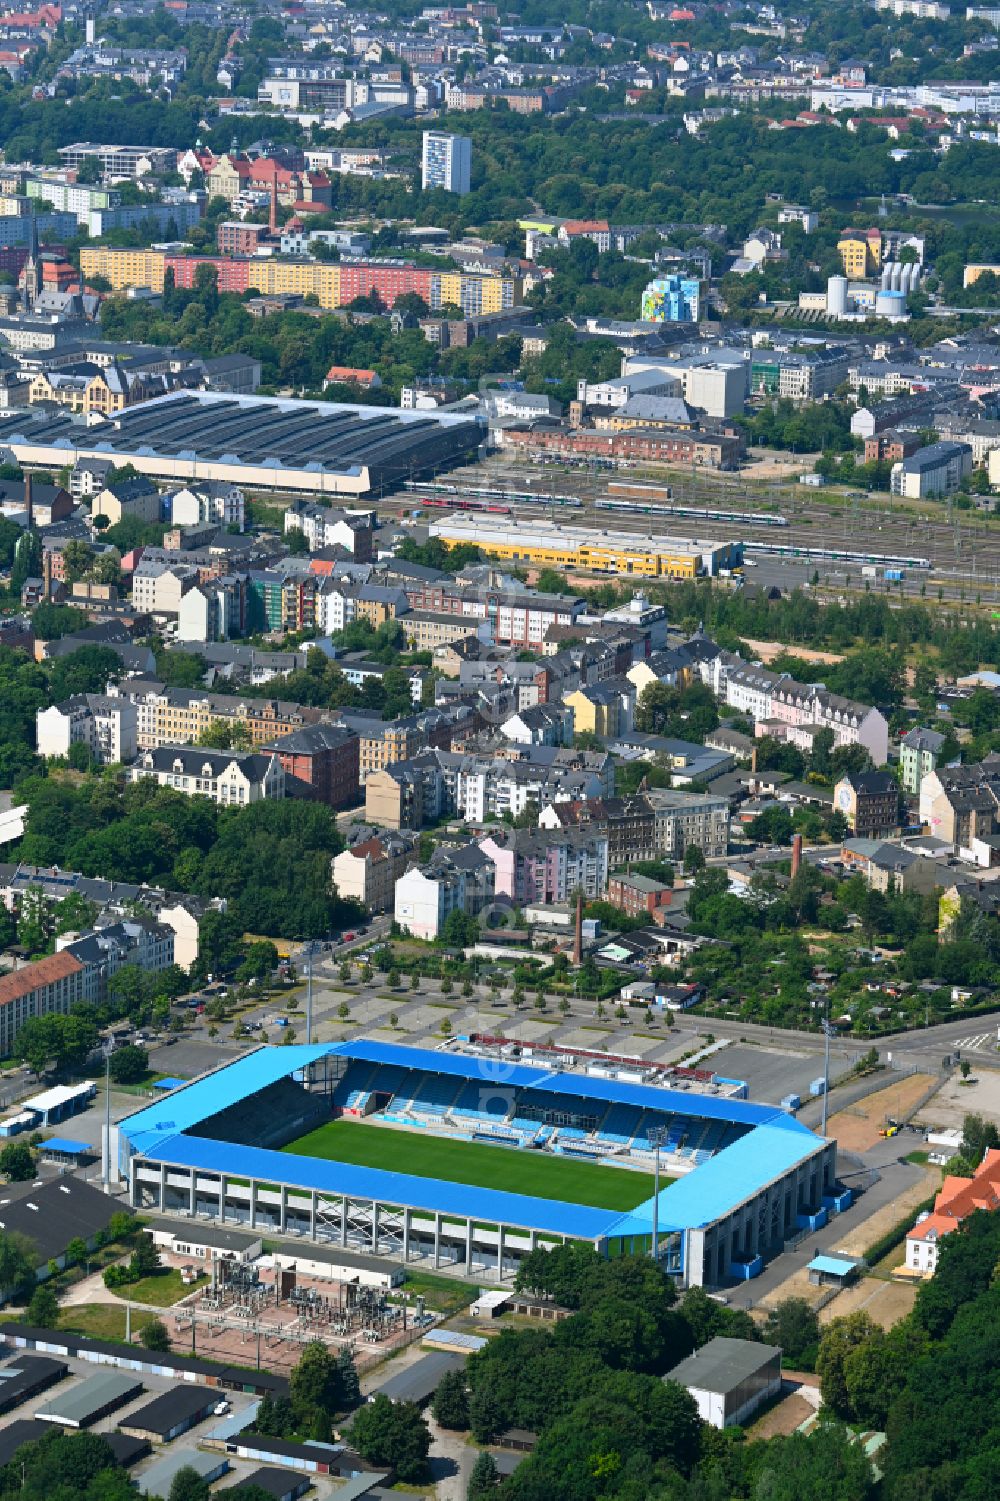 Aerial photograph Chemnitz - New building of the football stadium community4you ARENA of FC Chemnitz in Saxony